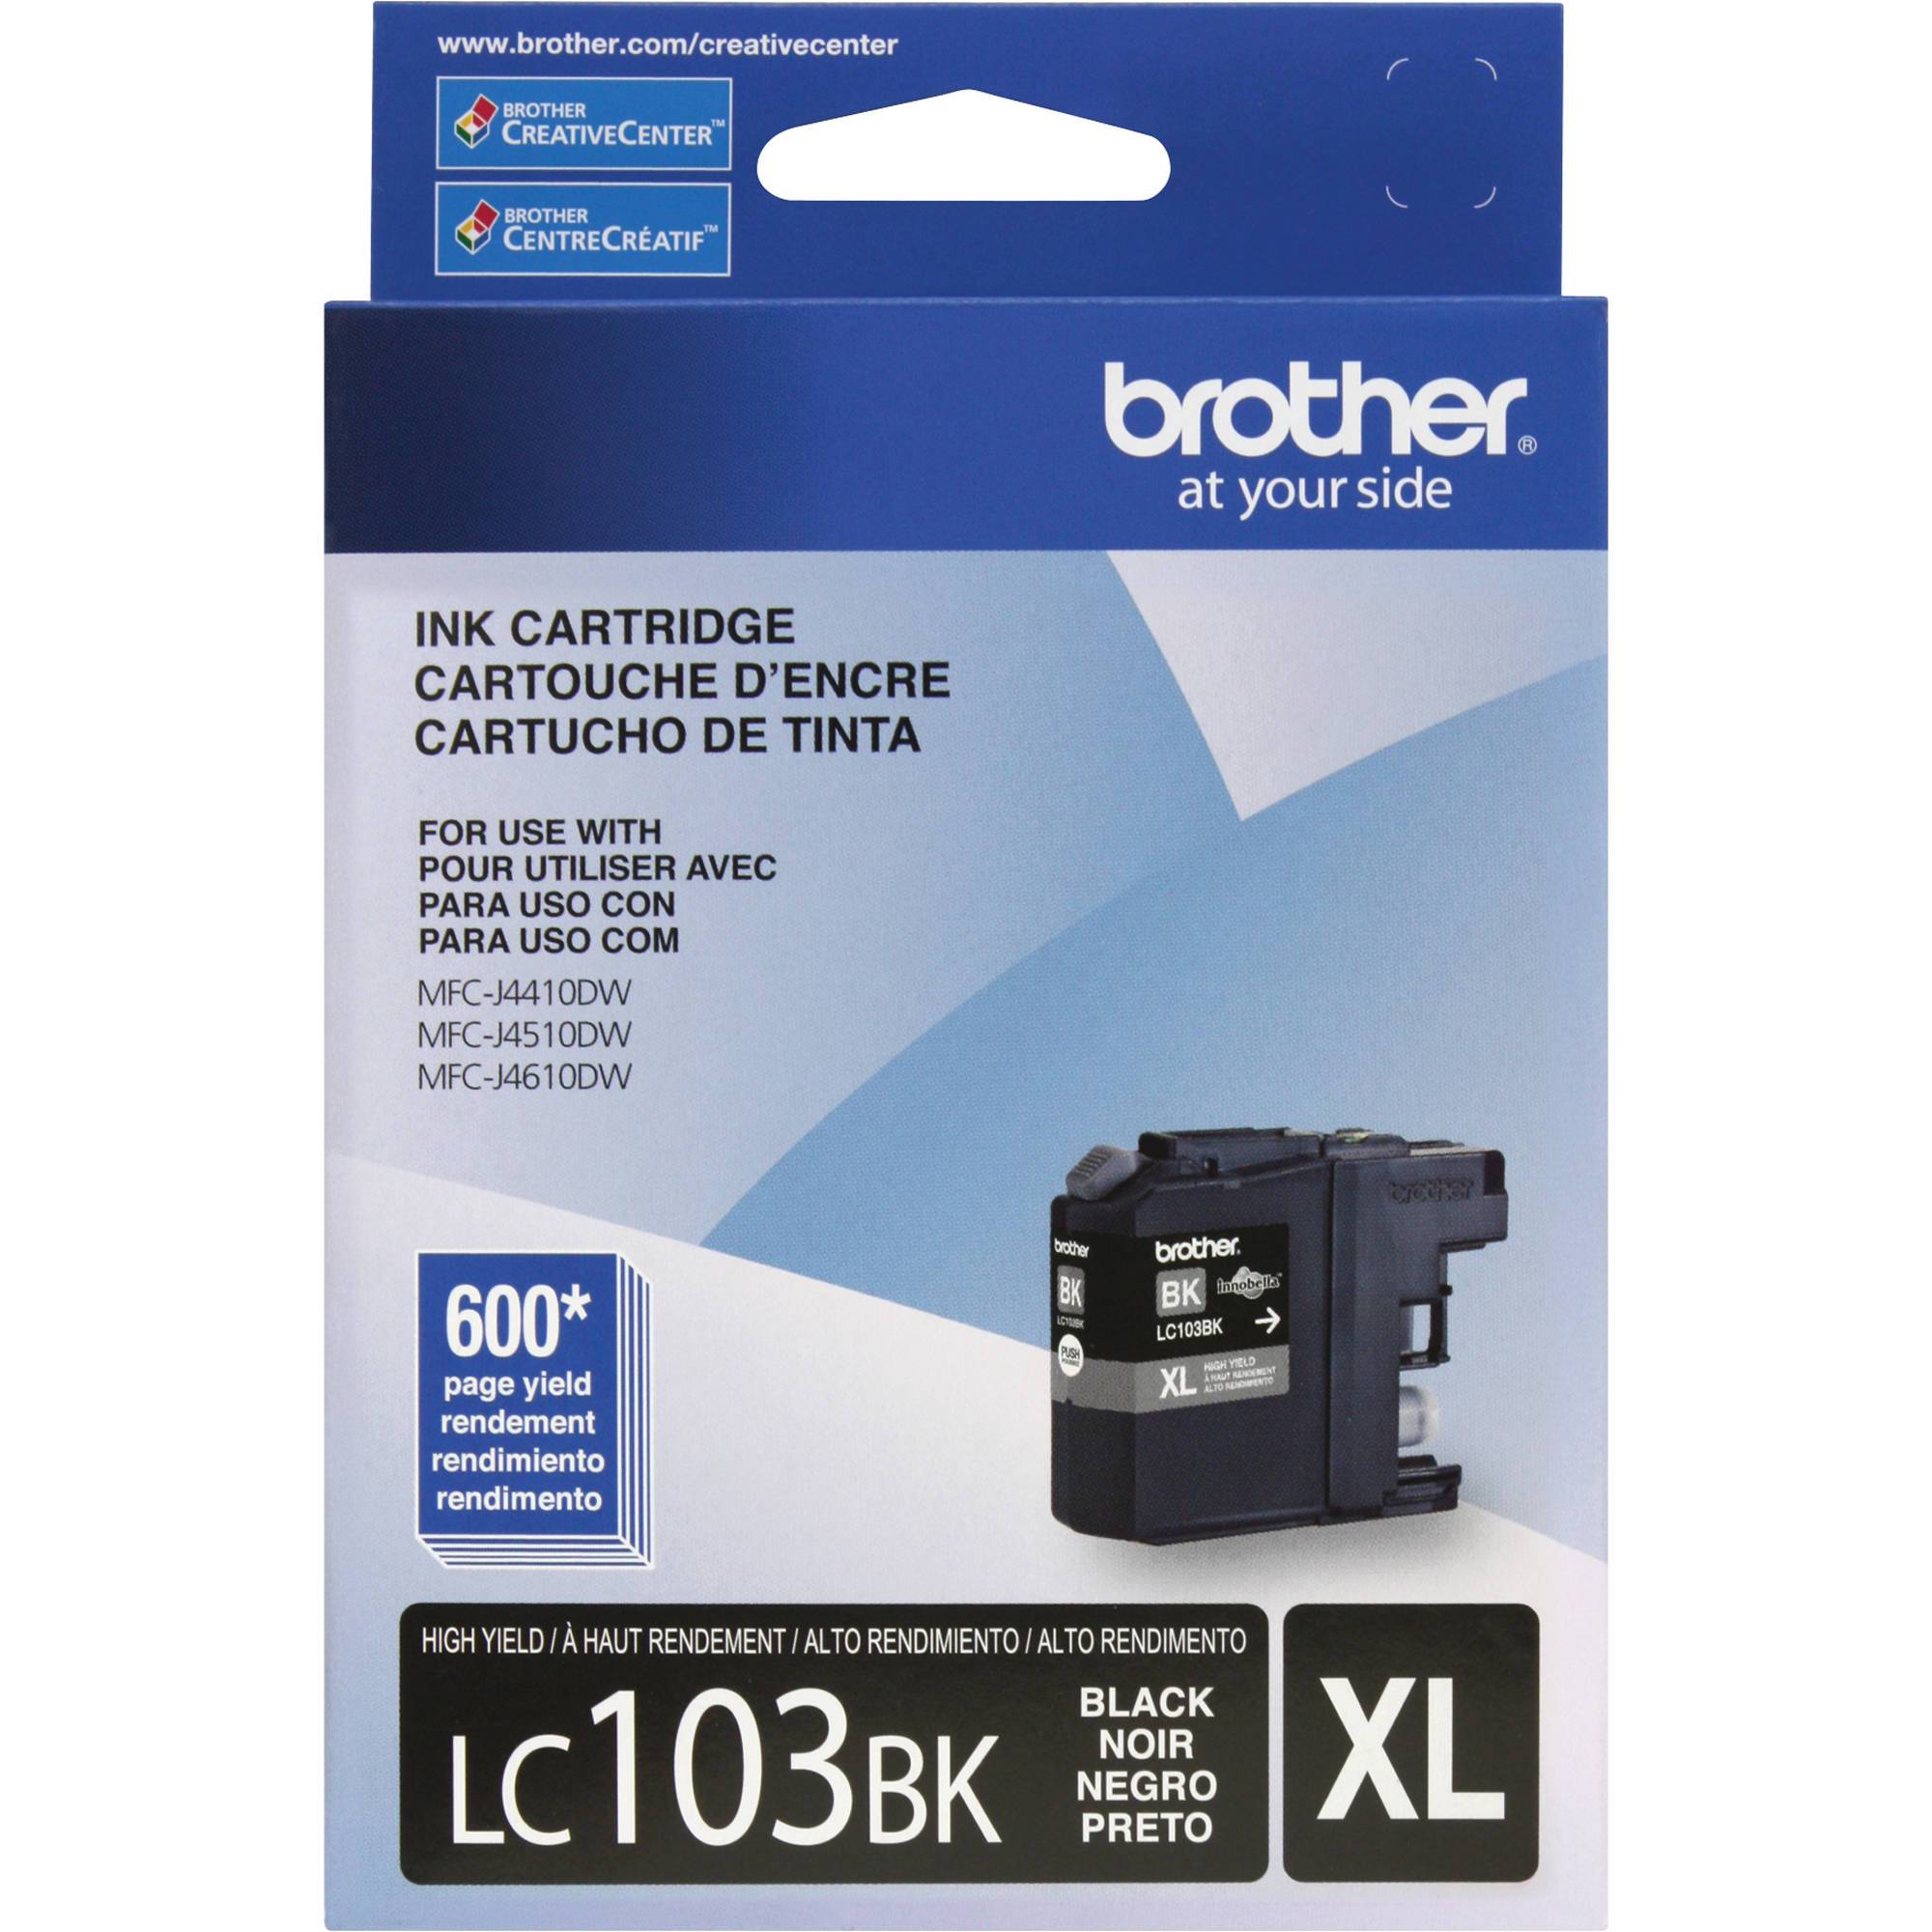 Absolute Toner Brother Genuine OEM LC103BKS High Yield Black Ink Cartridge MFC Series